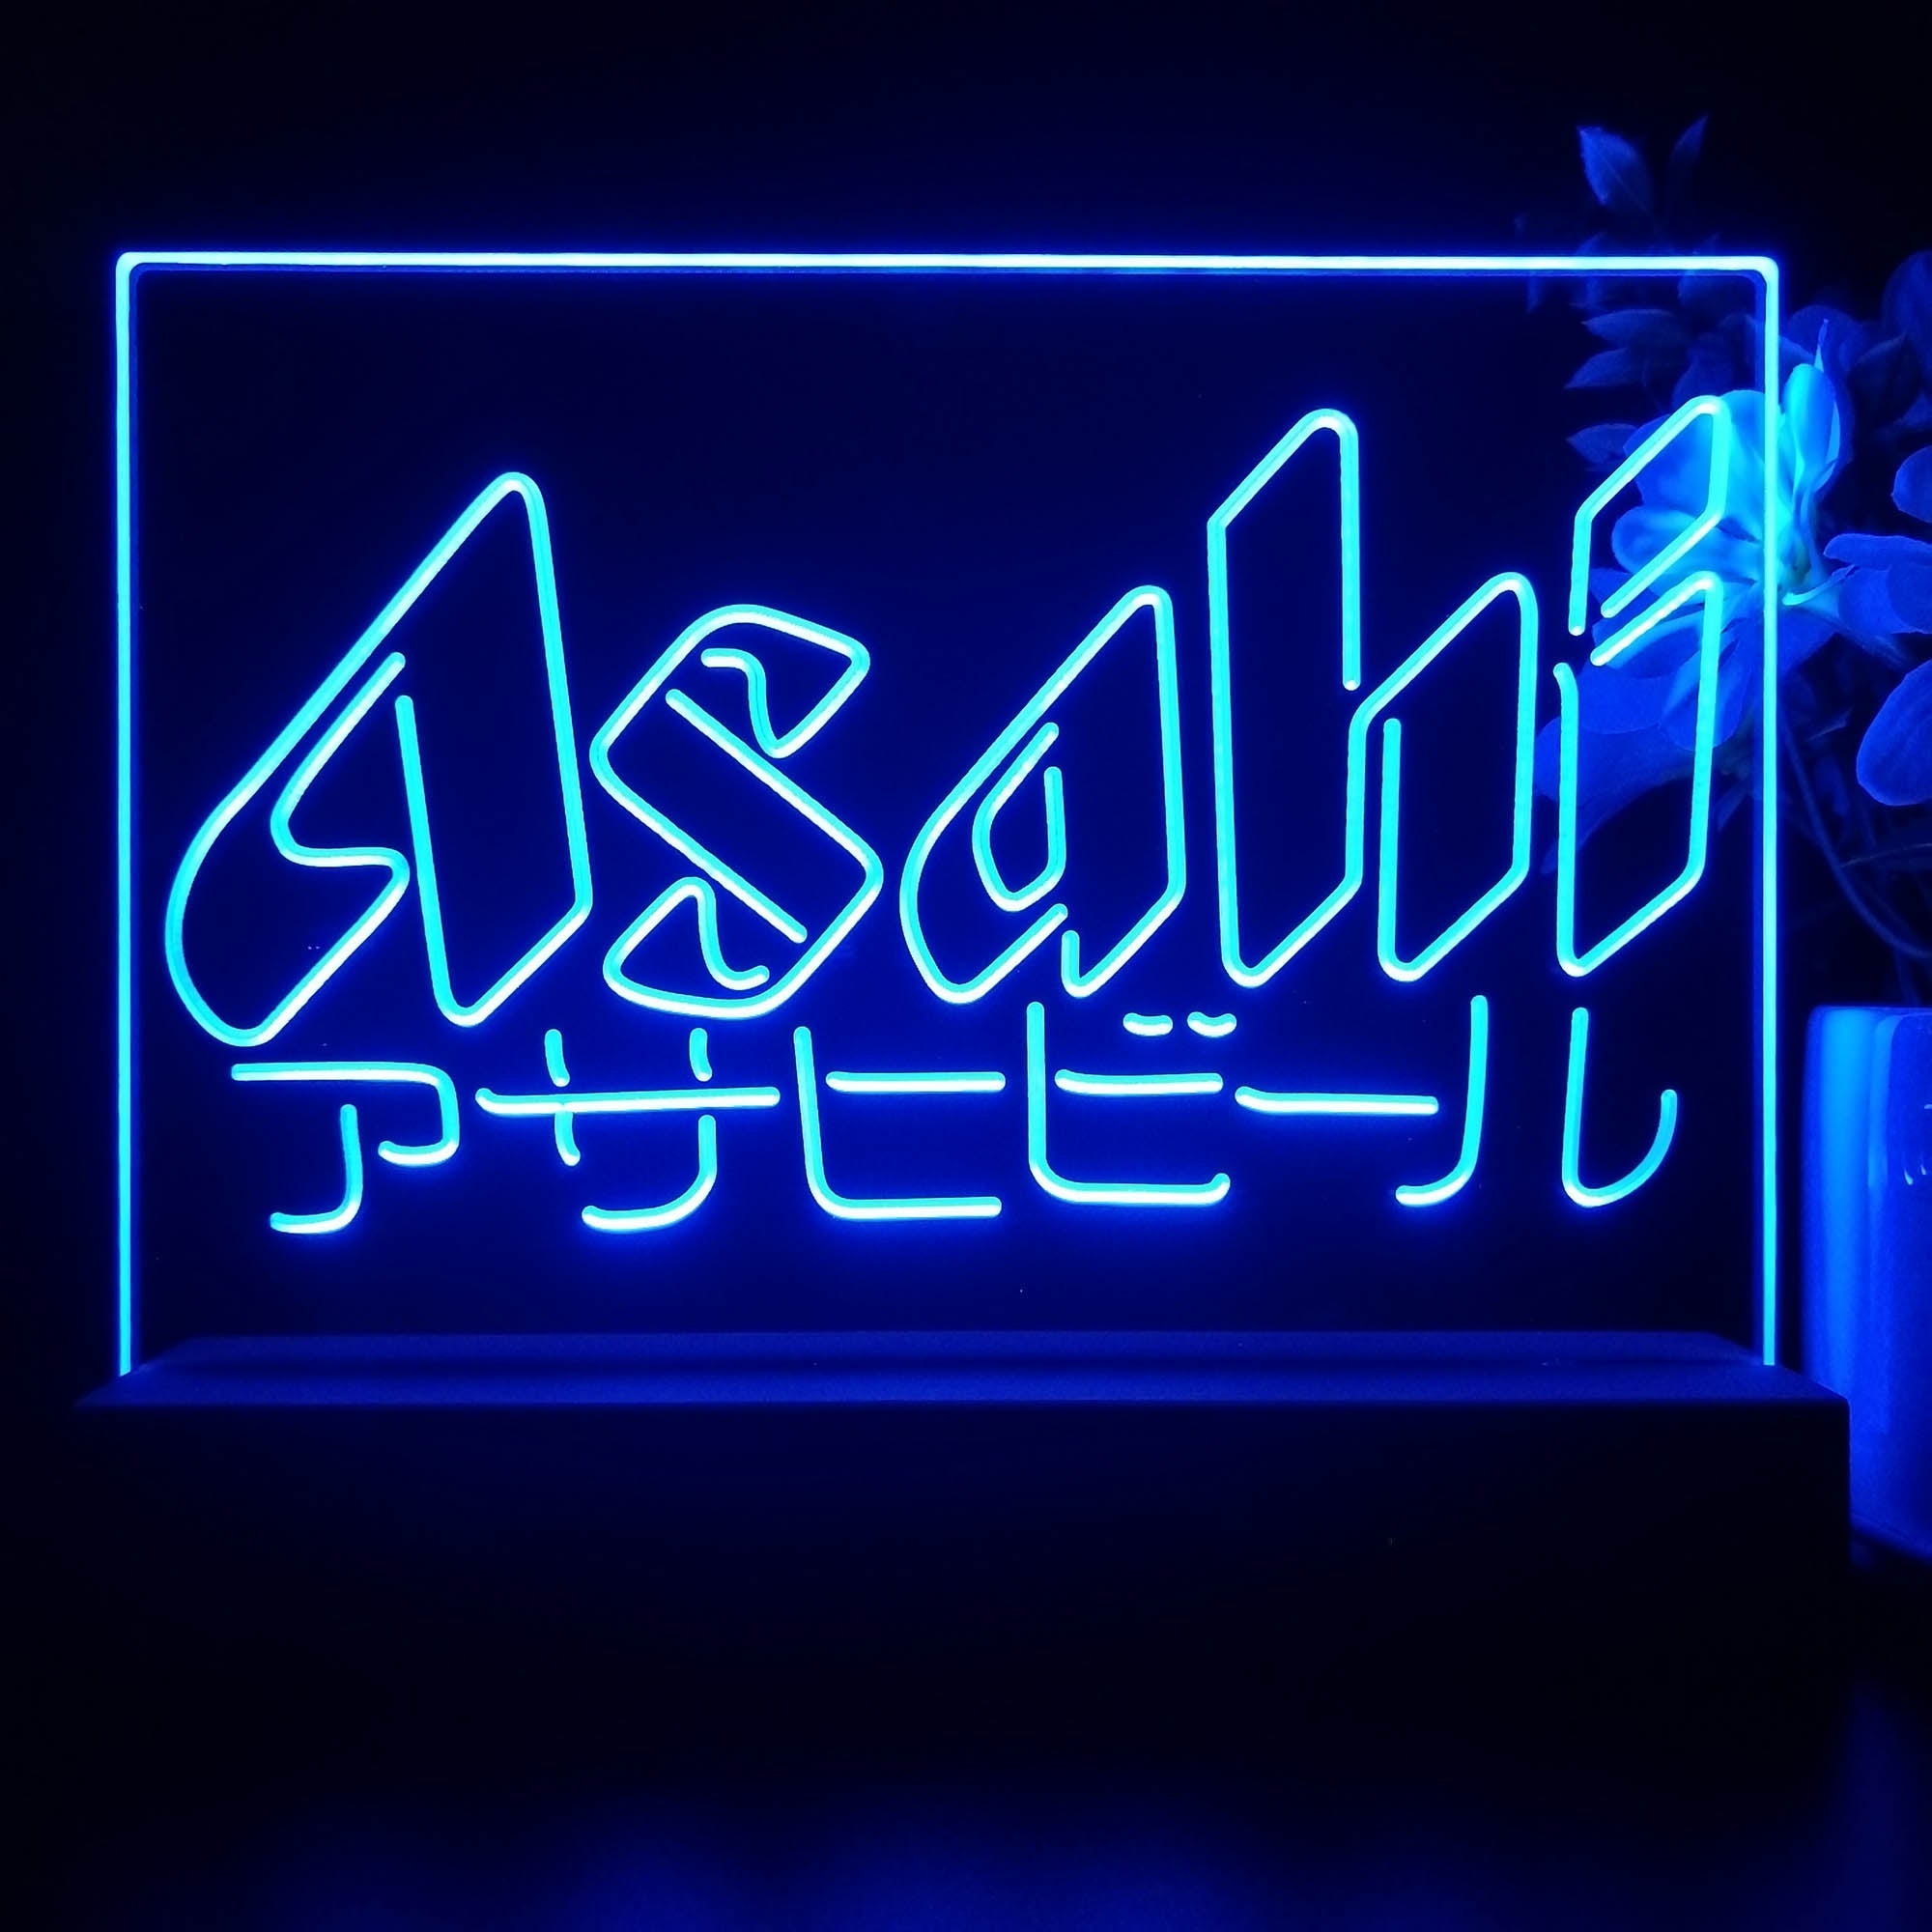 Asahi Japan Beer Bar Neon Sign Pub Bar Lamp